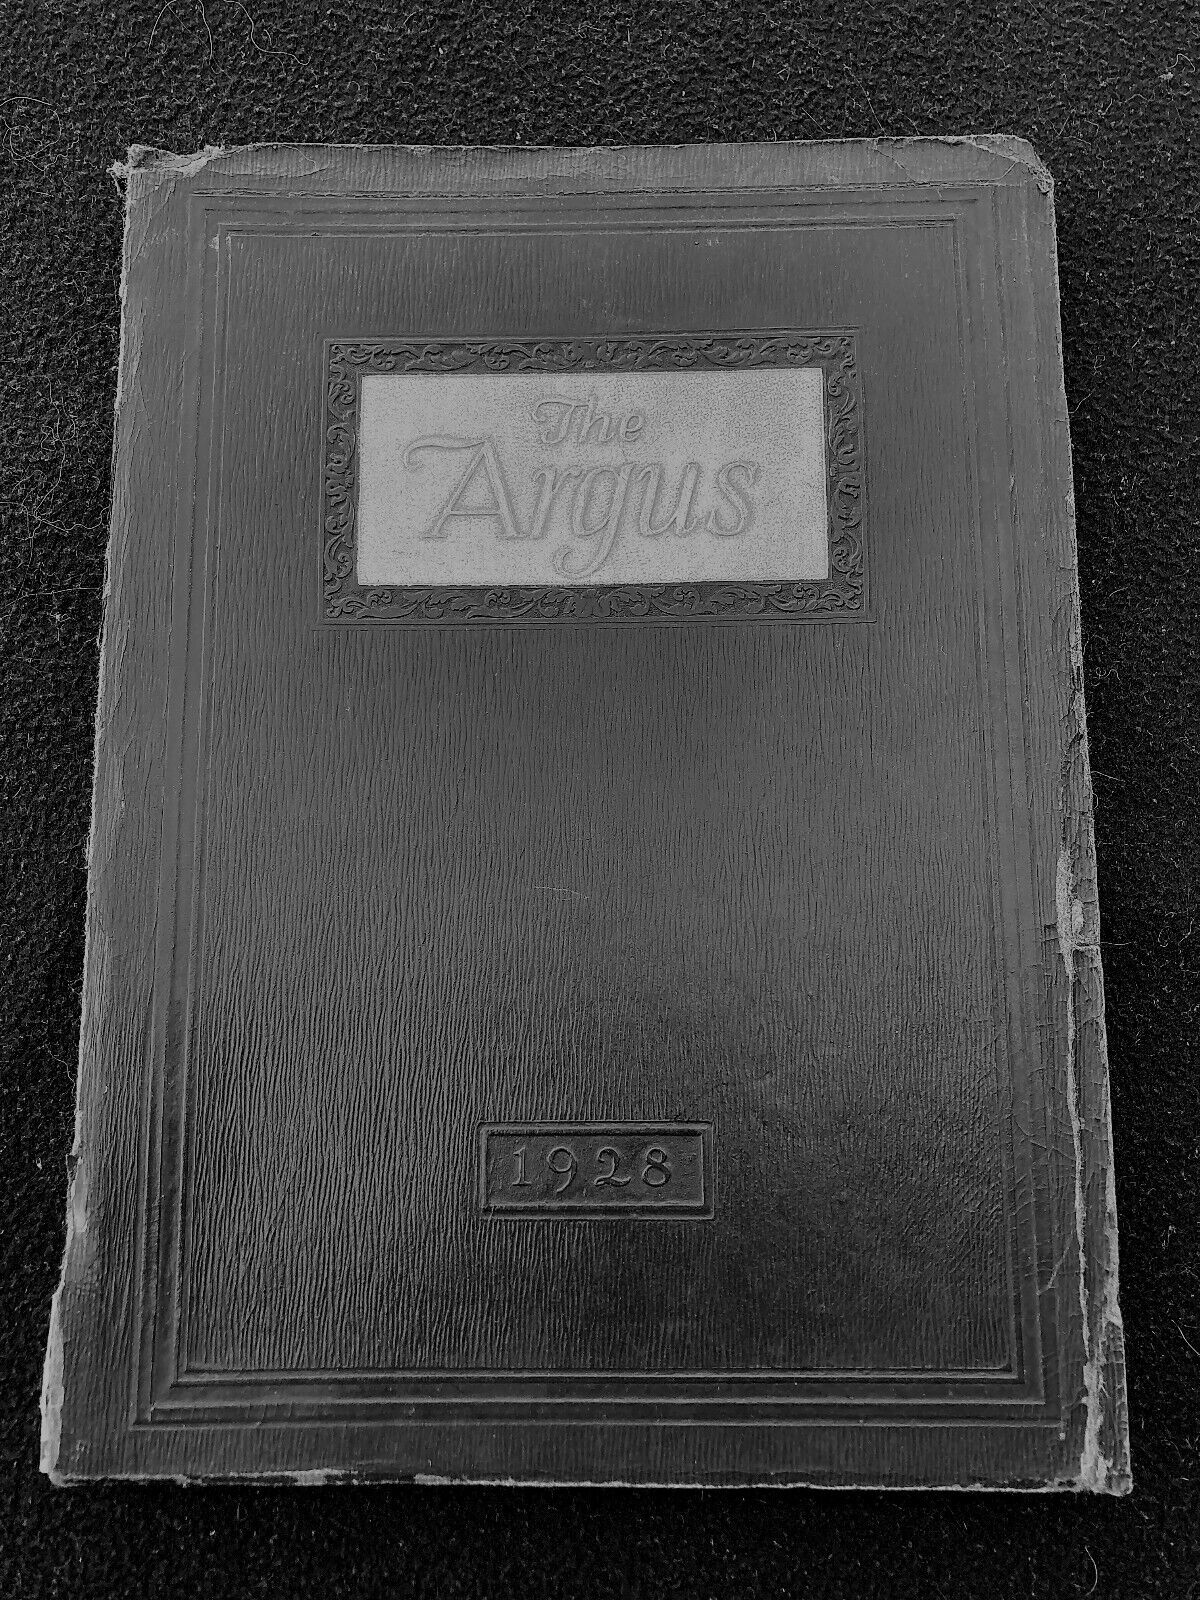 THE ARGUS Yearbook 1928 South High School Columbus Ohio